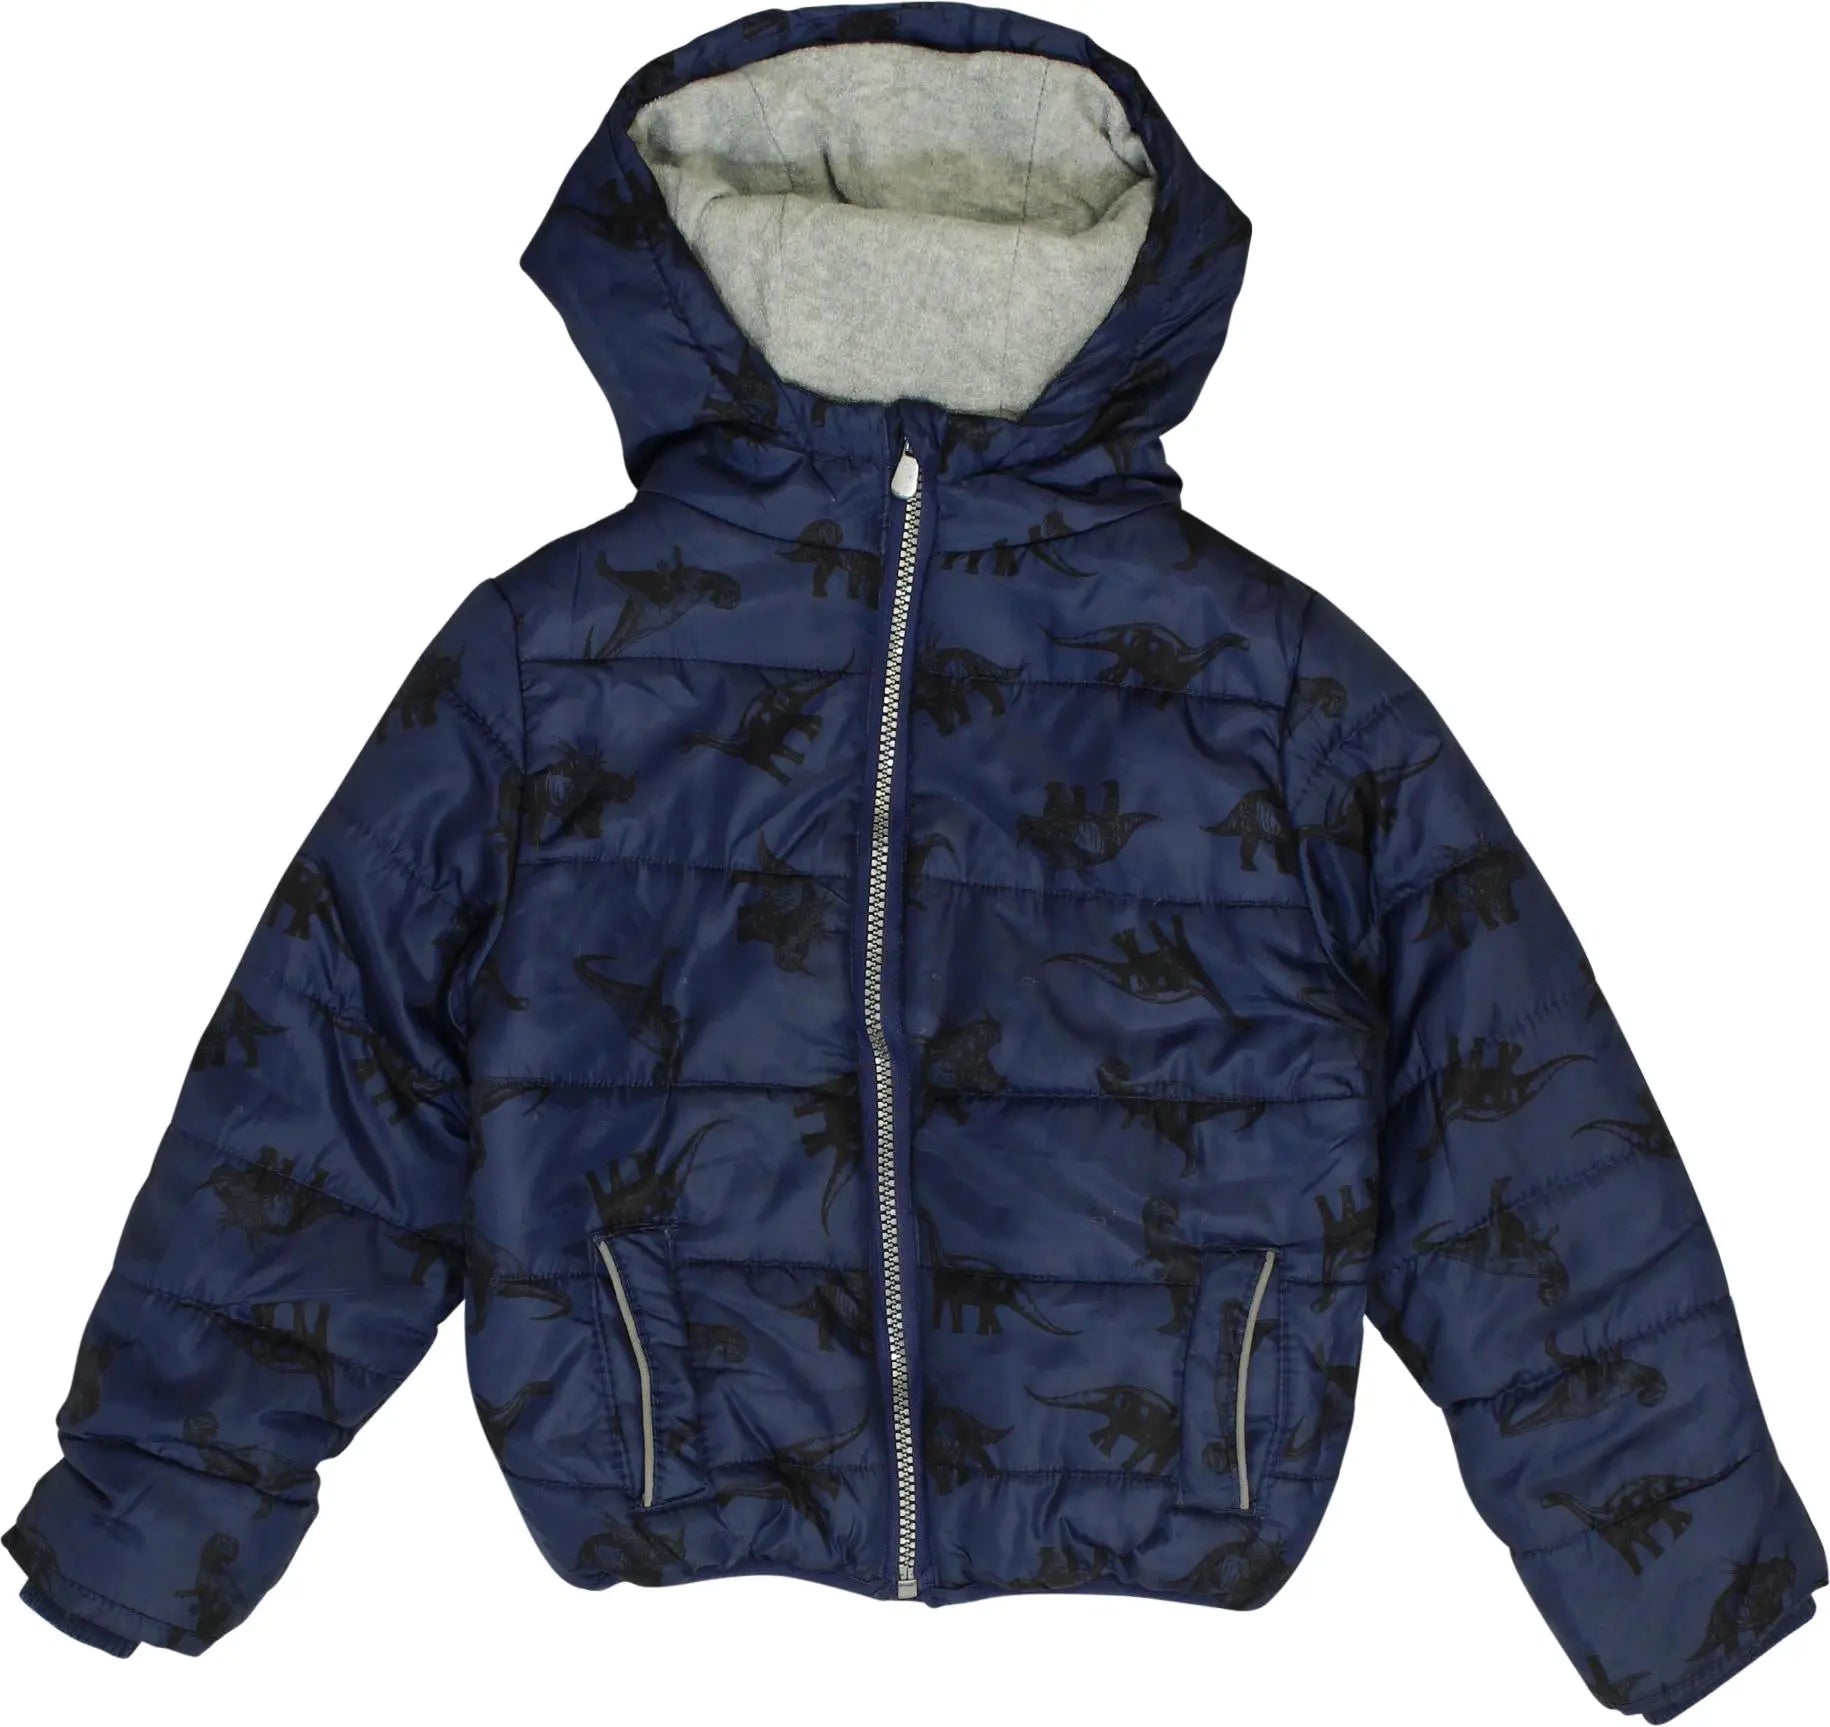 Zeeman - Blue Jacket- ThriftTale.com - Vintage and second handclothing